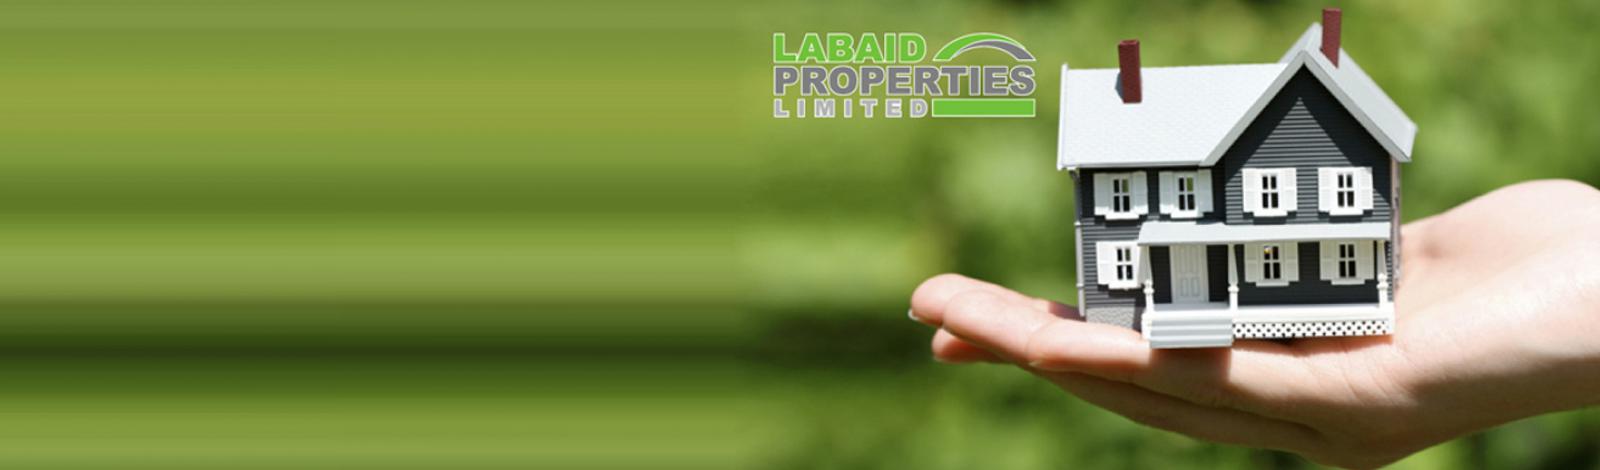 Labaid Properties Ltd. banner